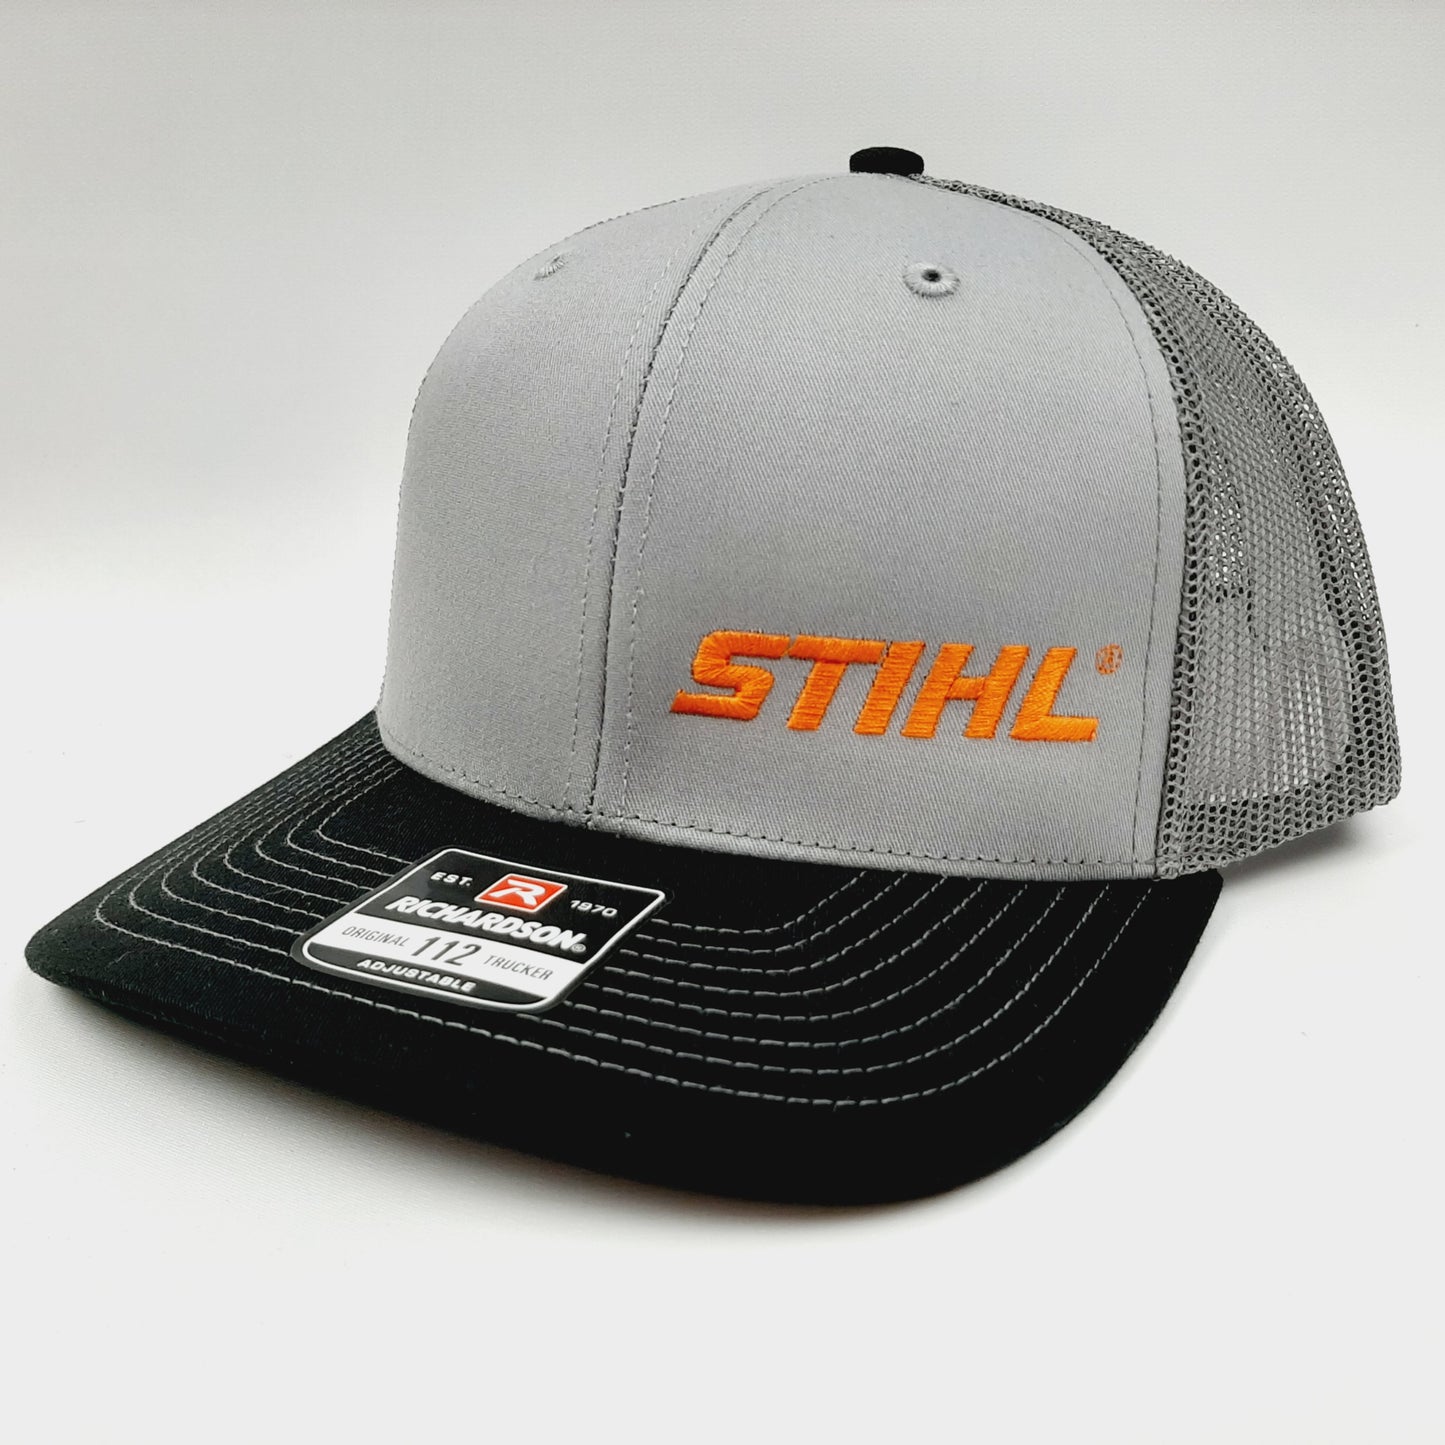 Richardson 112 Stihl Chainsaw Mesh Snapback Cap Hat Tri-Color